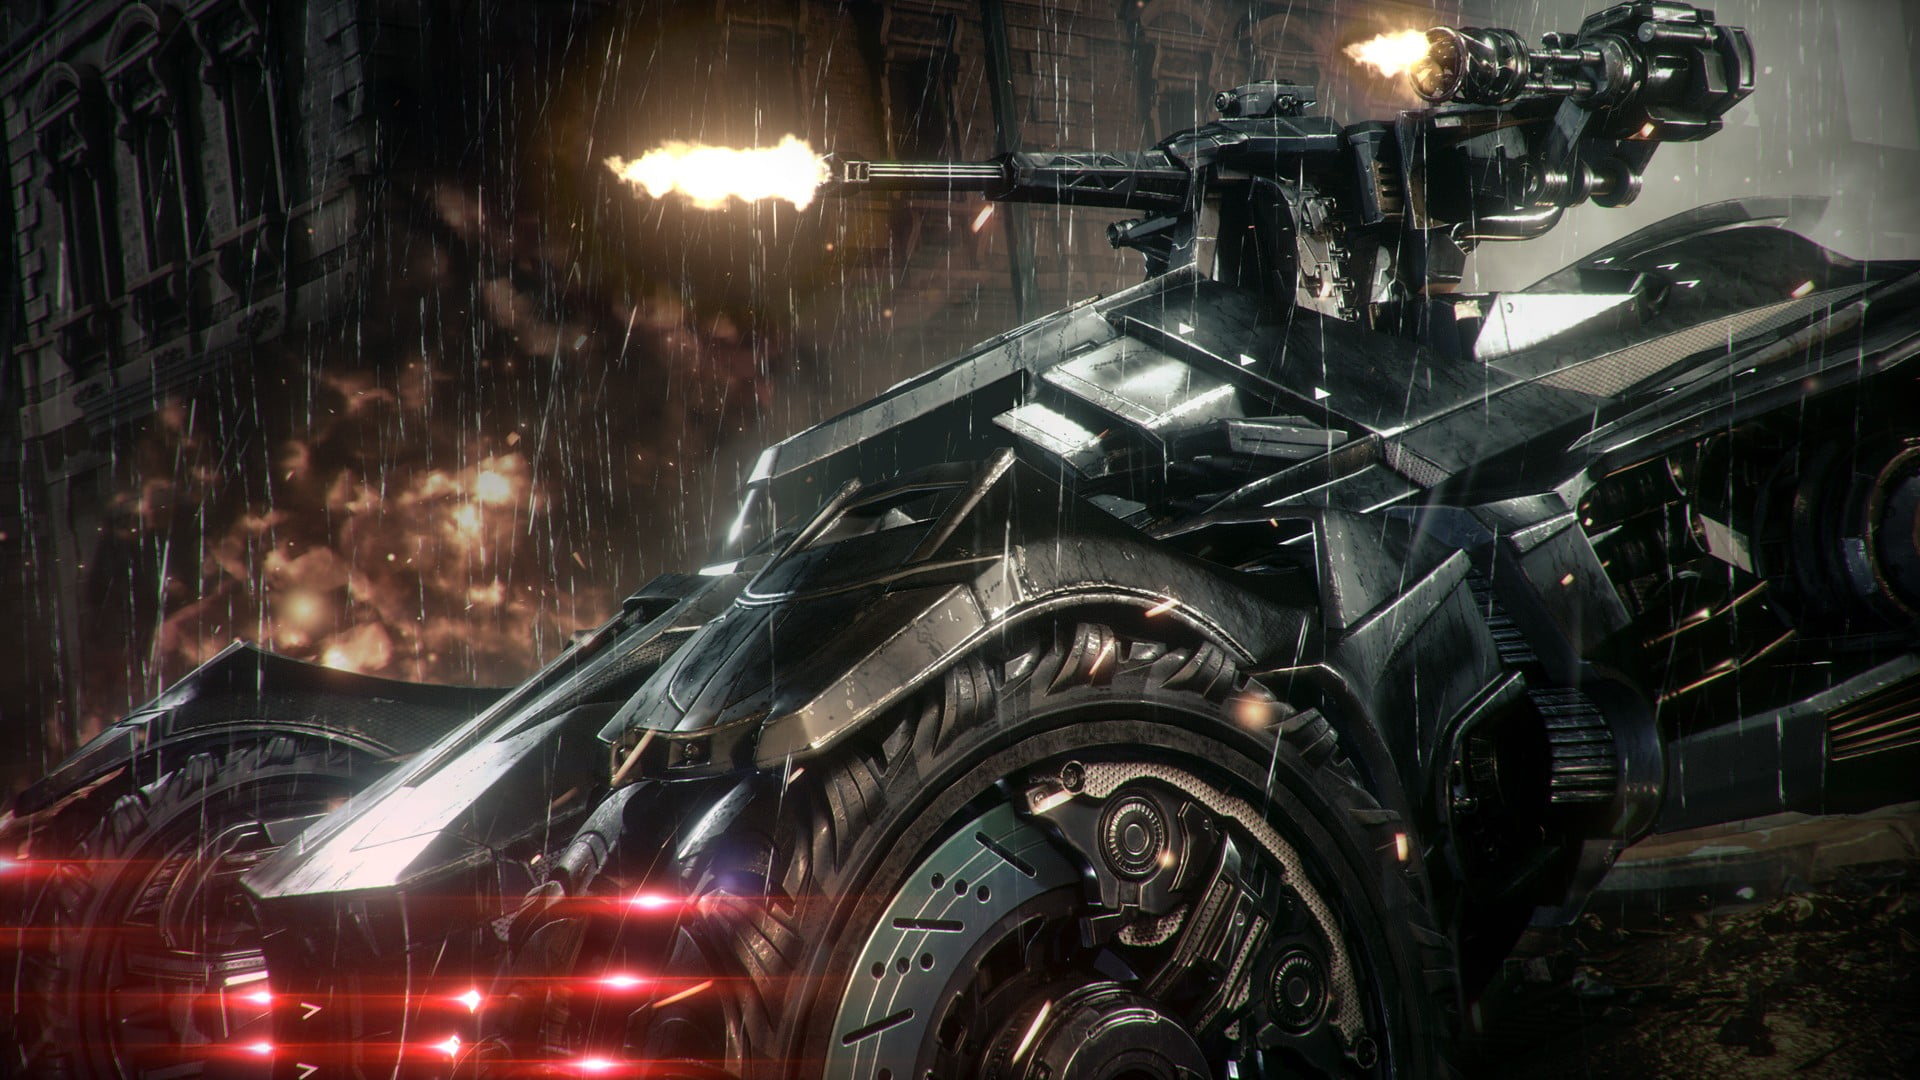 Black Heavy Machinery With Machine Gun Digital Wallpaper Batman